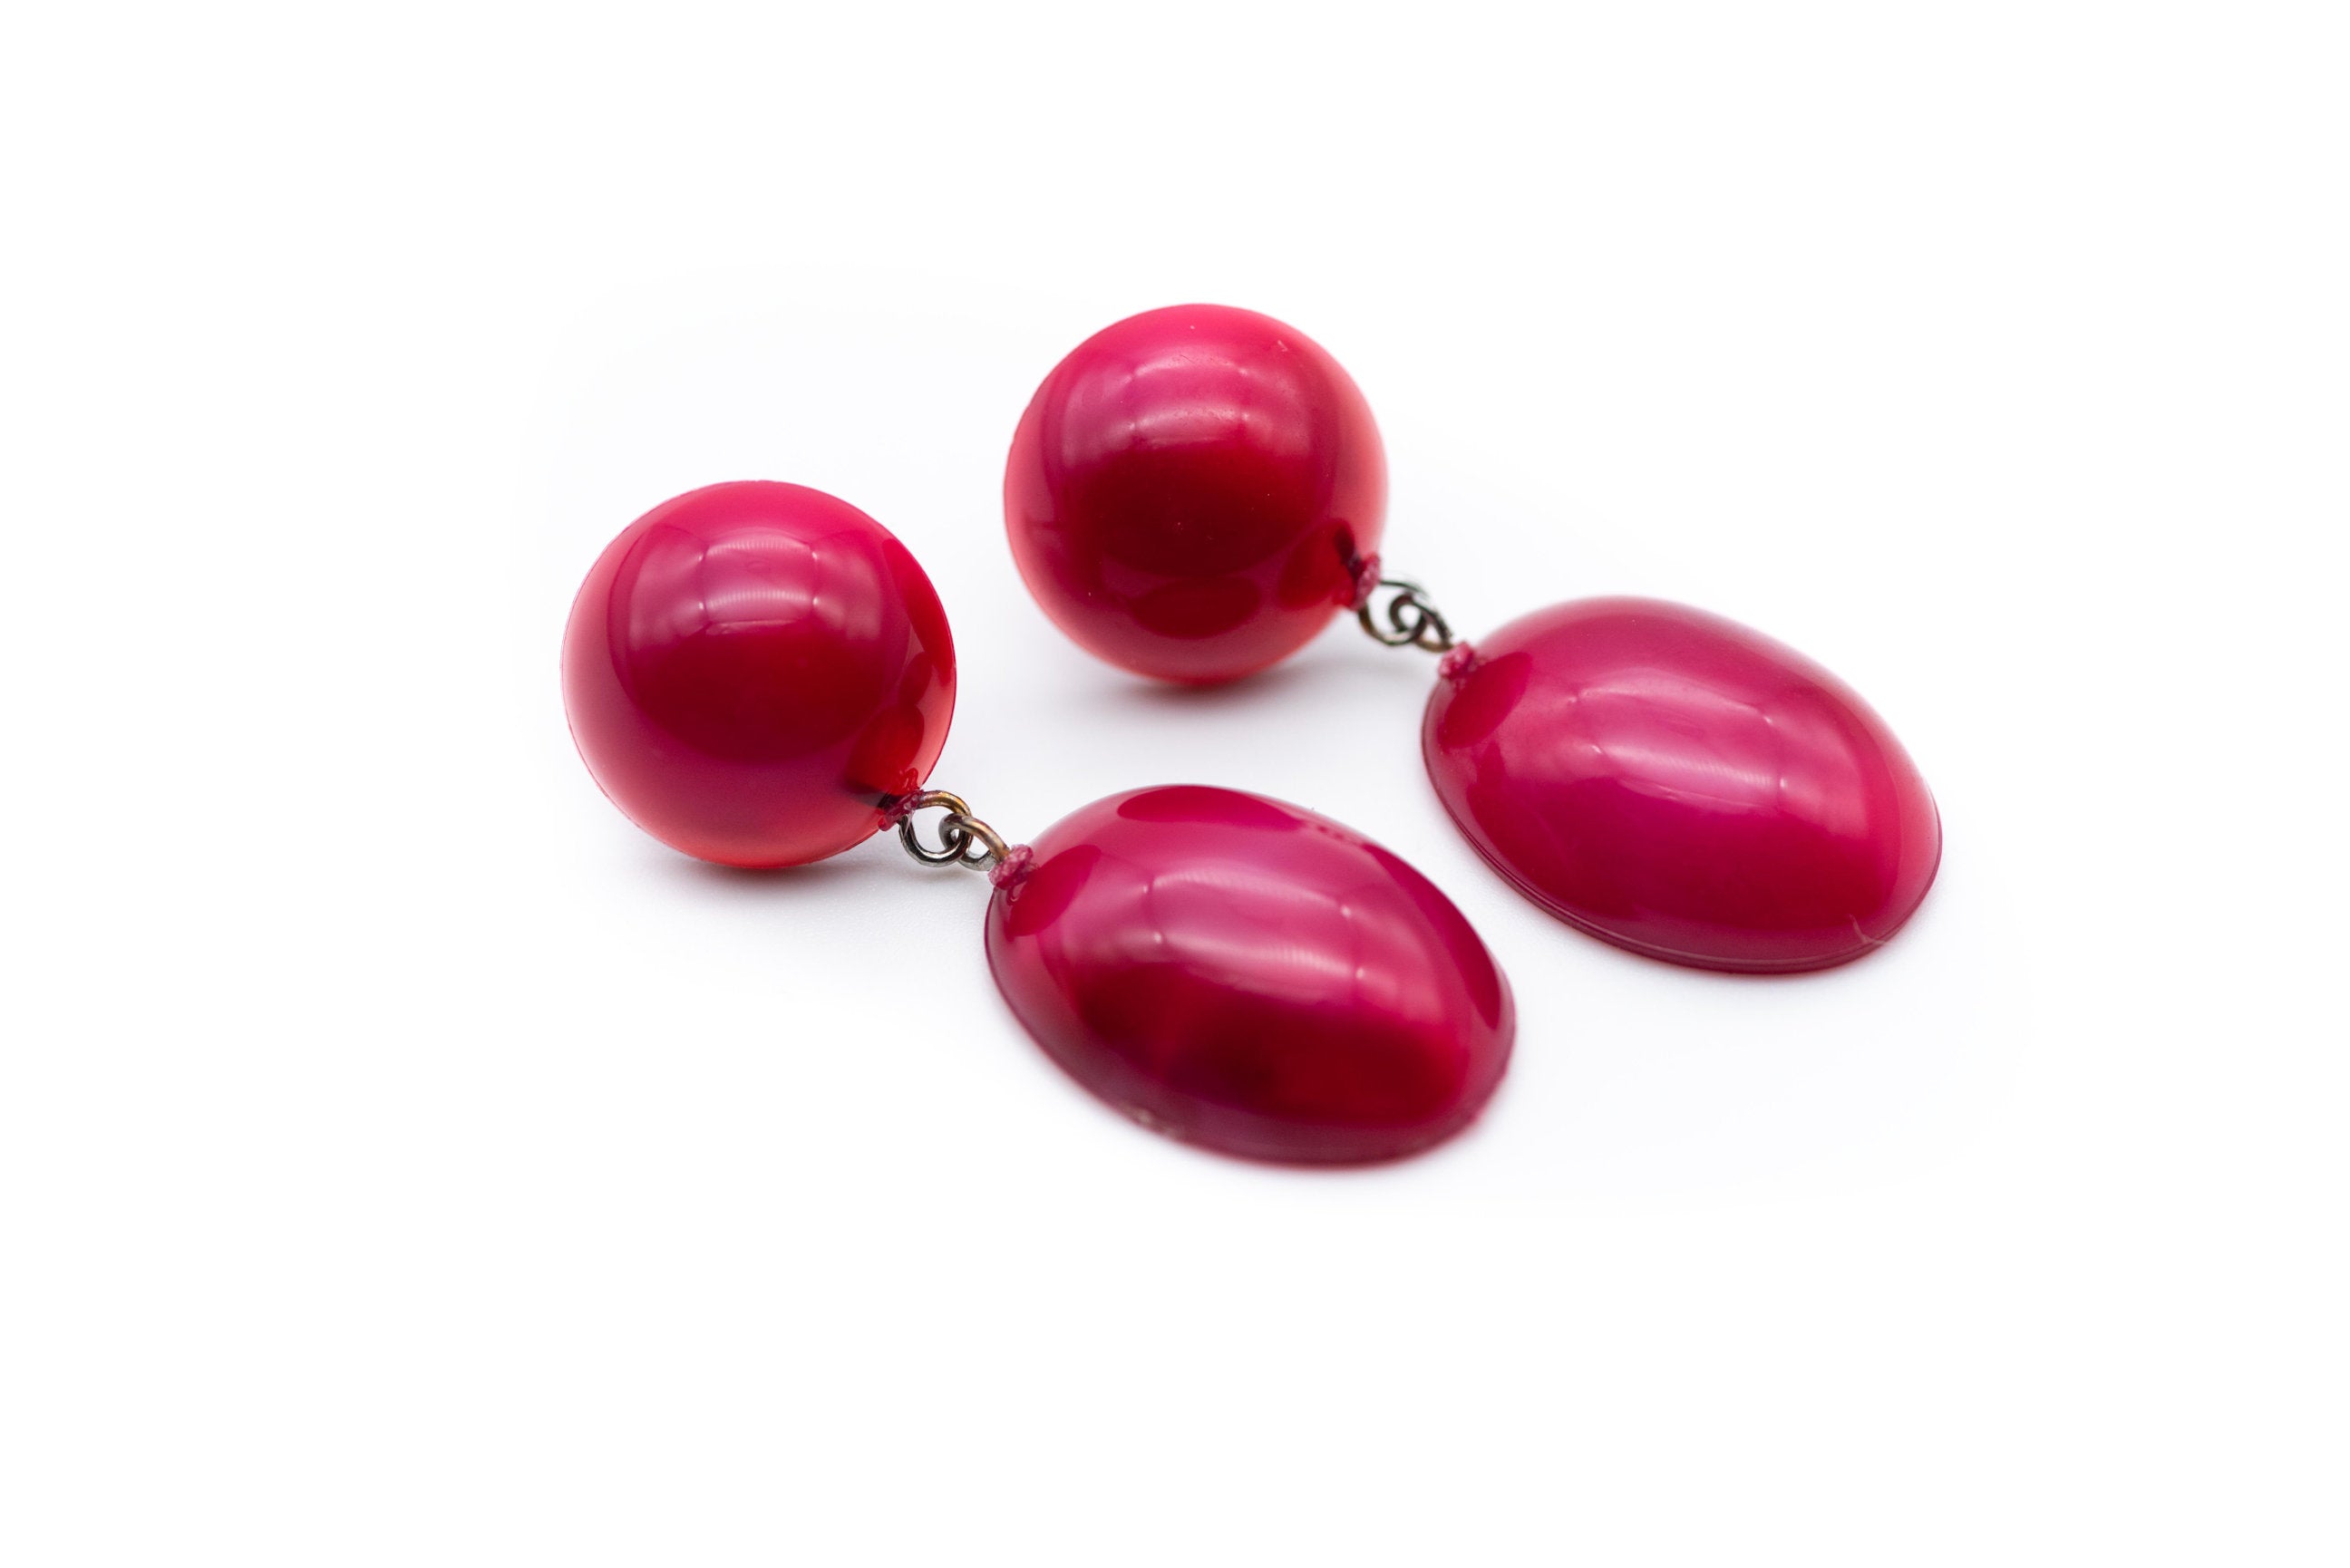 Cranberry Aura Glow Jelly Bean Earrings